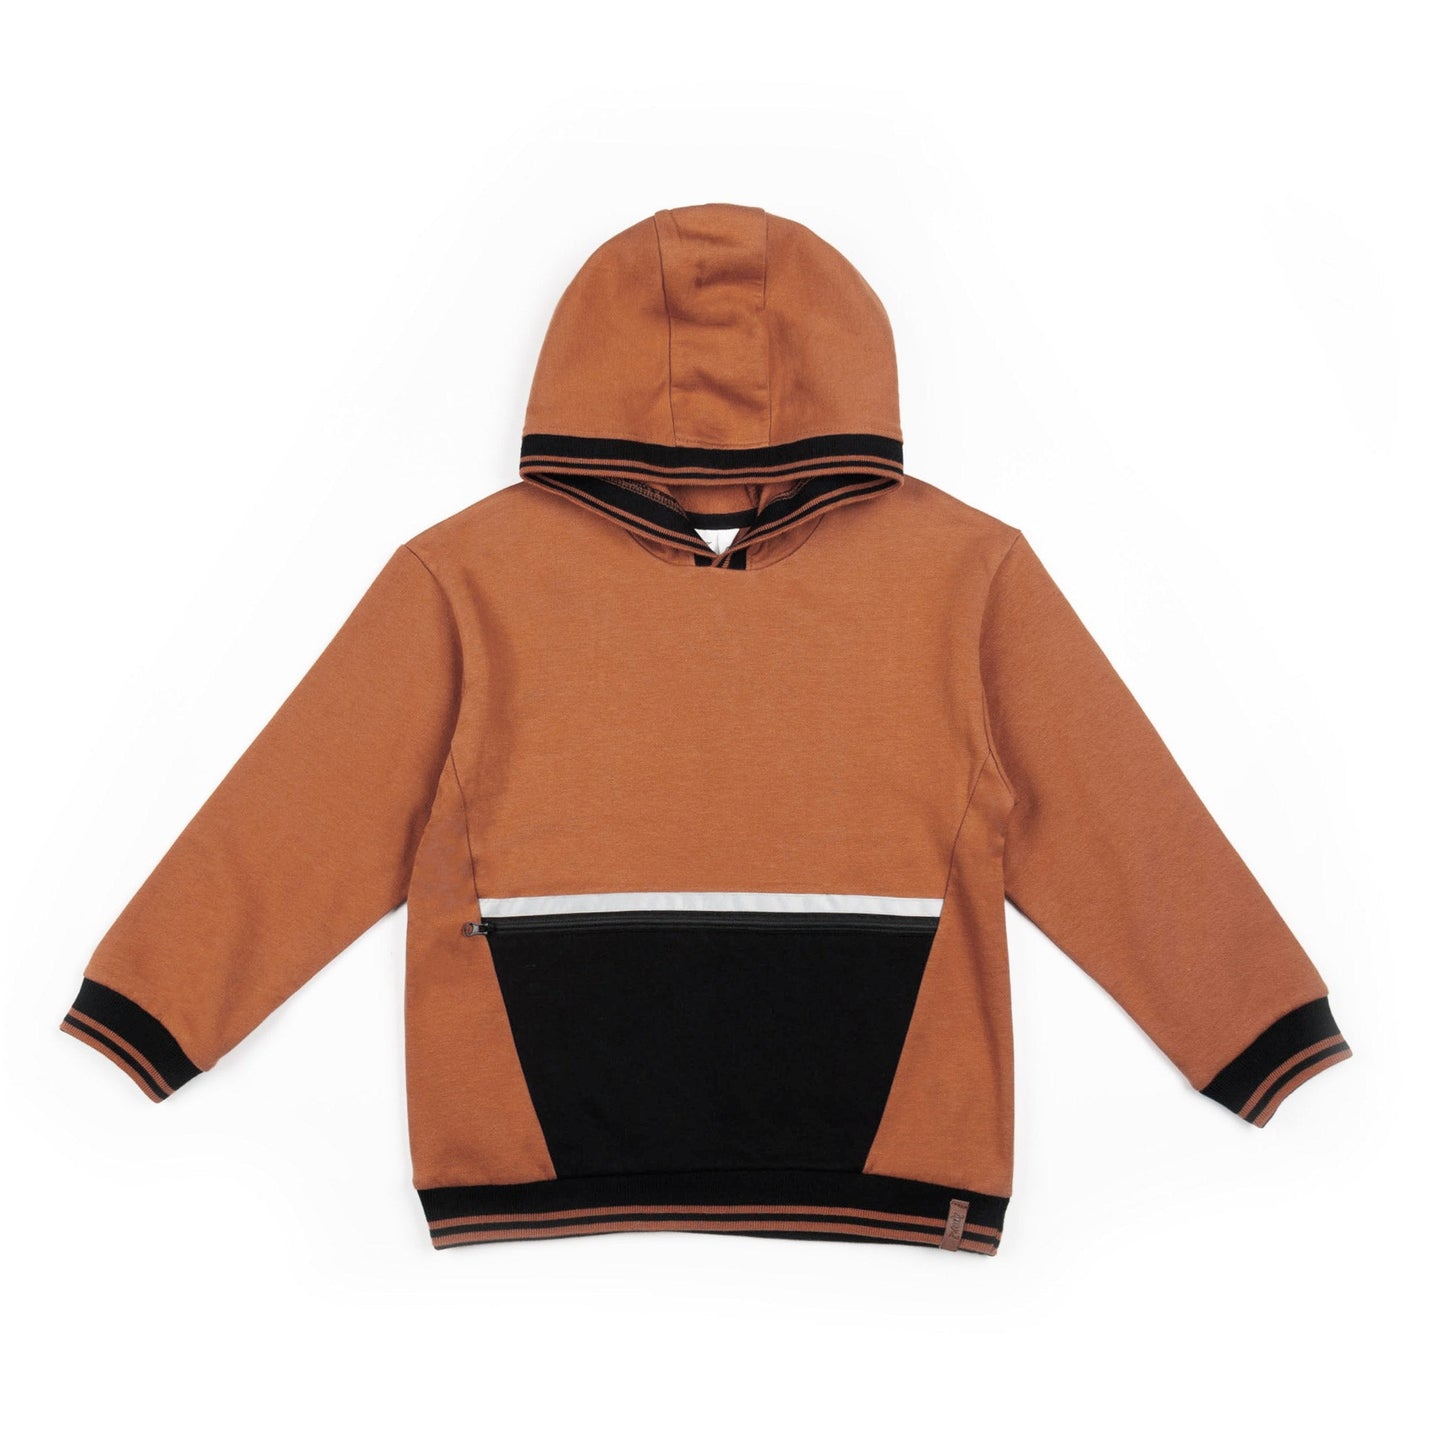 Hooded Fleece Top With Zipper Pocket Brown And Black Sweaters, Cardigans & Vests Deux par Deux 